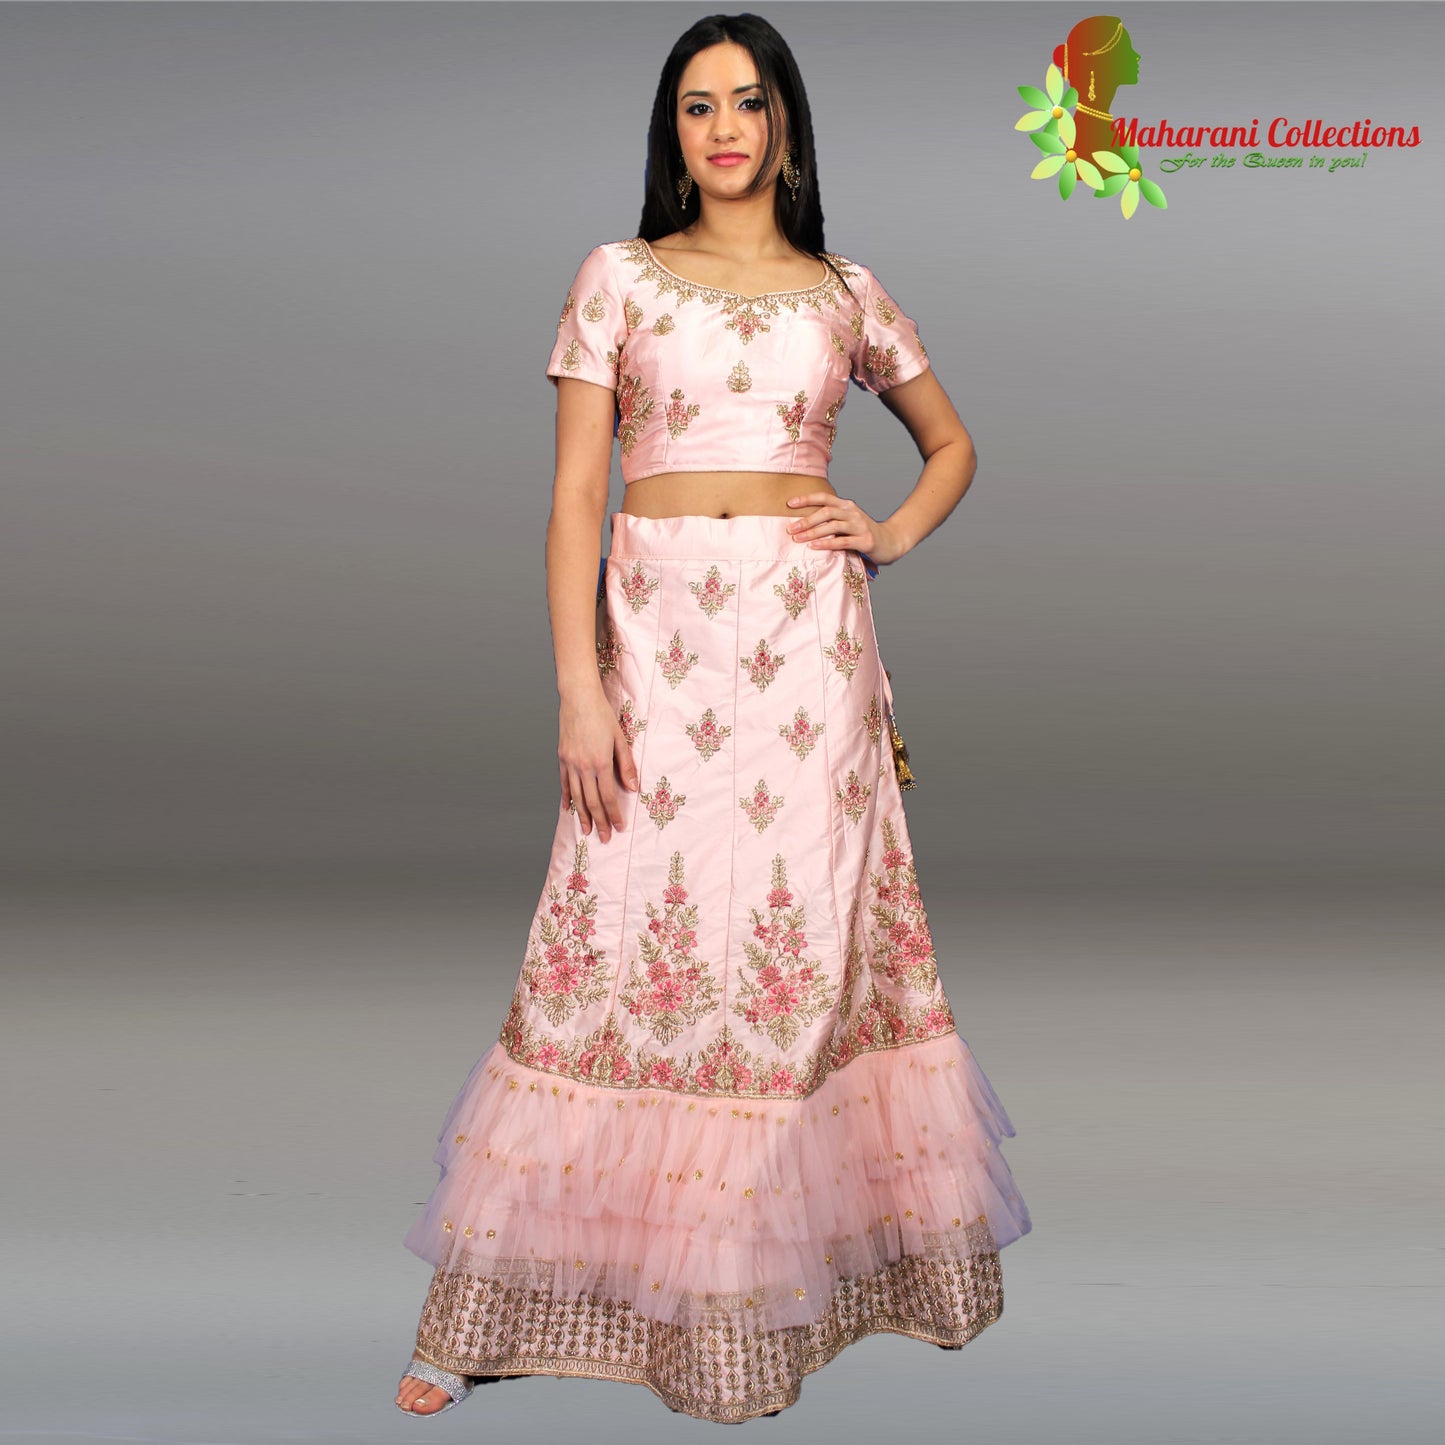 Maharani's Designer Net-Silk Lehenga - Light Pink with Zari Embroidery